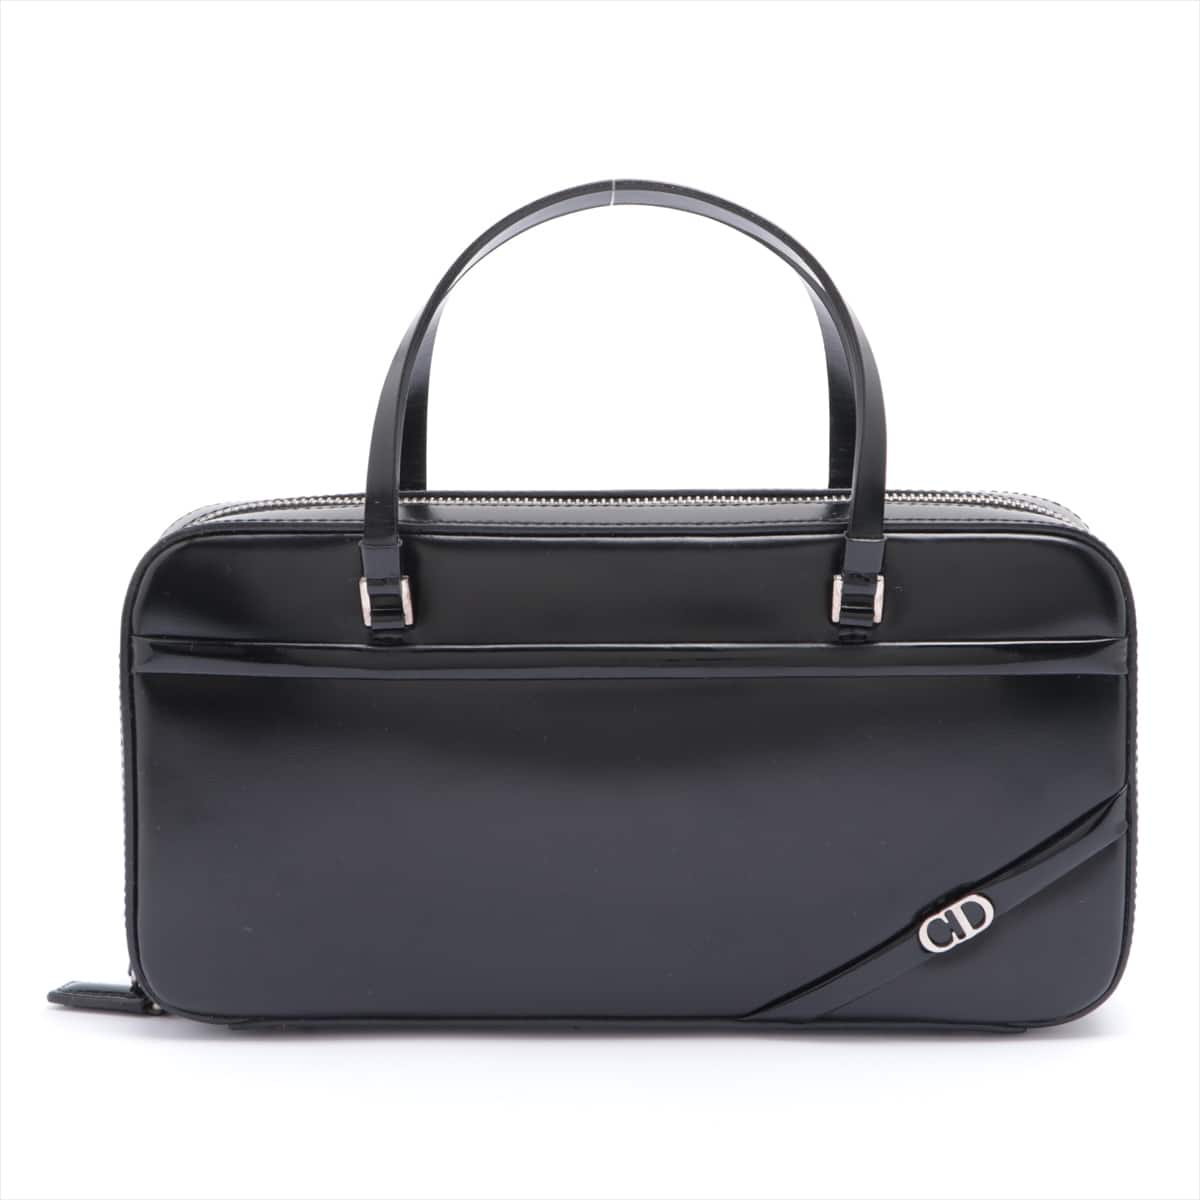 Christian Dior Leather Hand bag Black